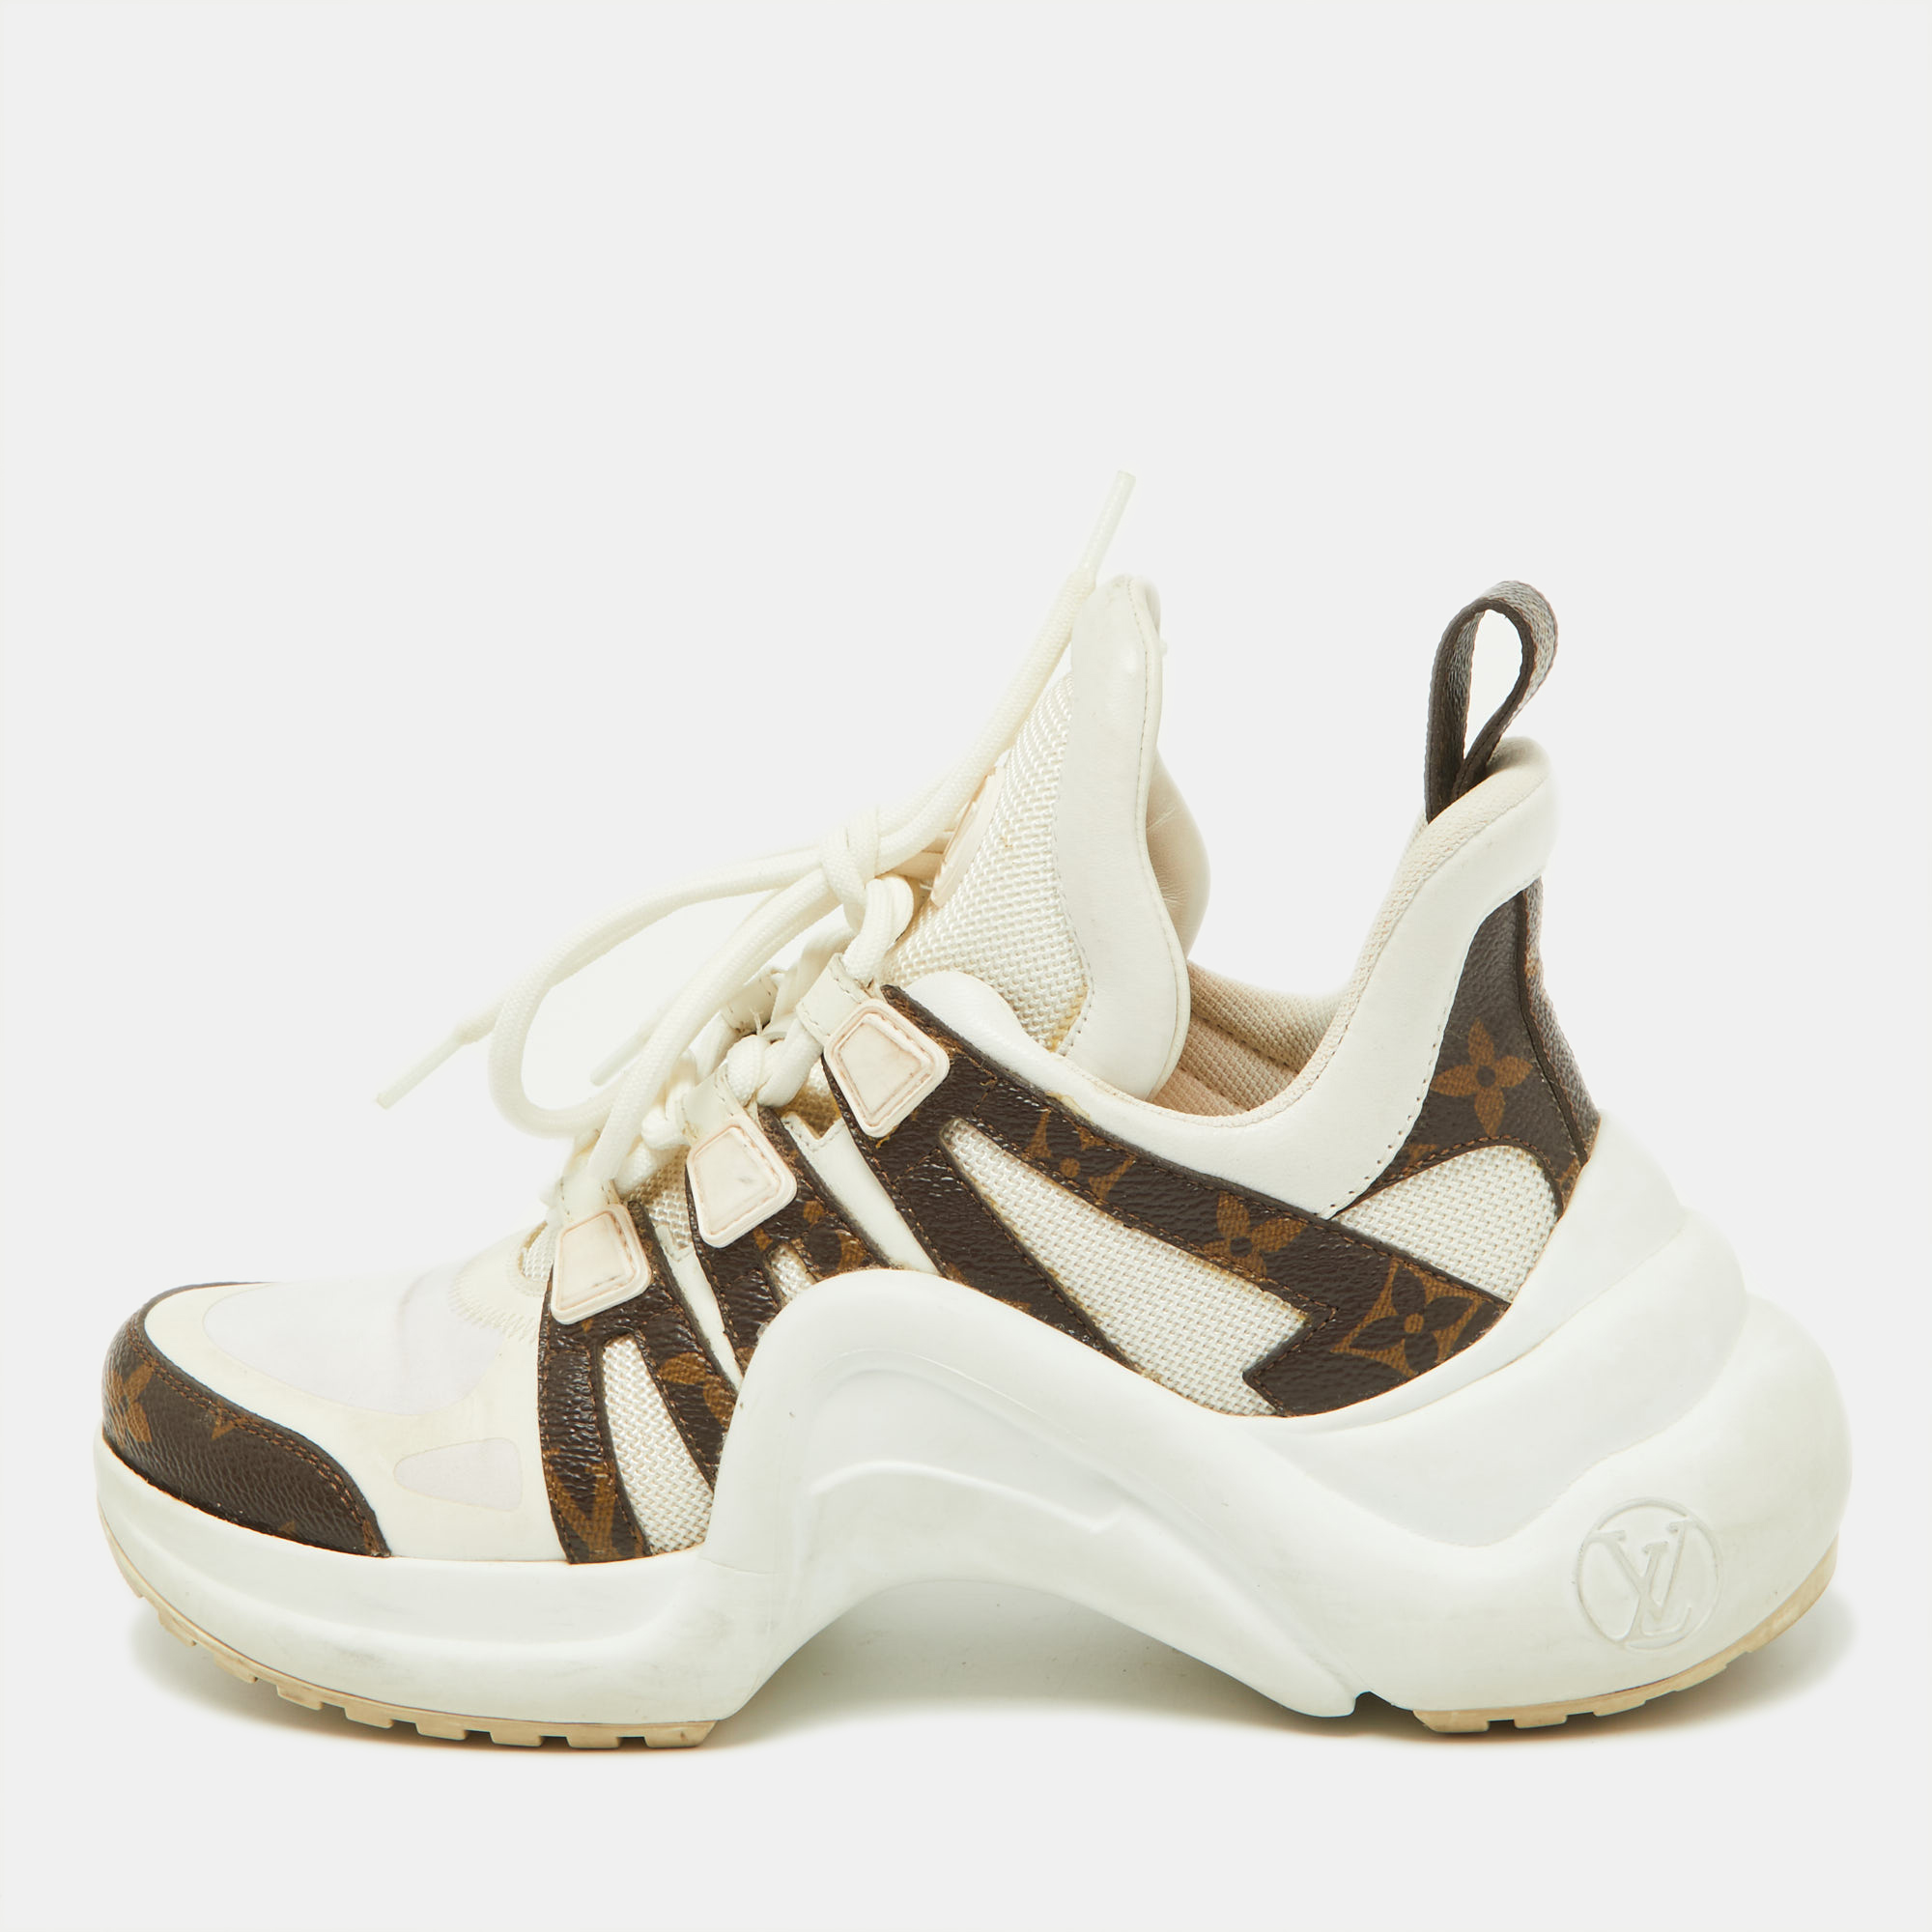 Louis vuitton white mesh and nylon archlight sneakers size 36